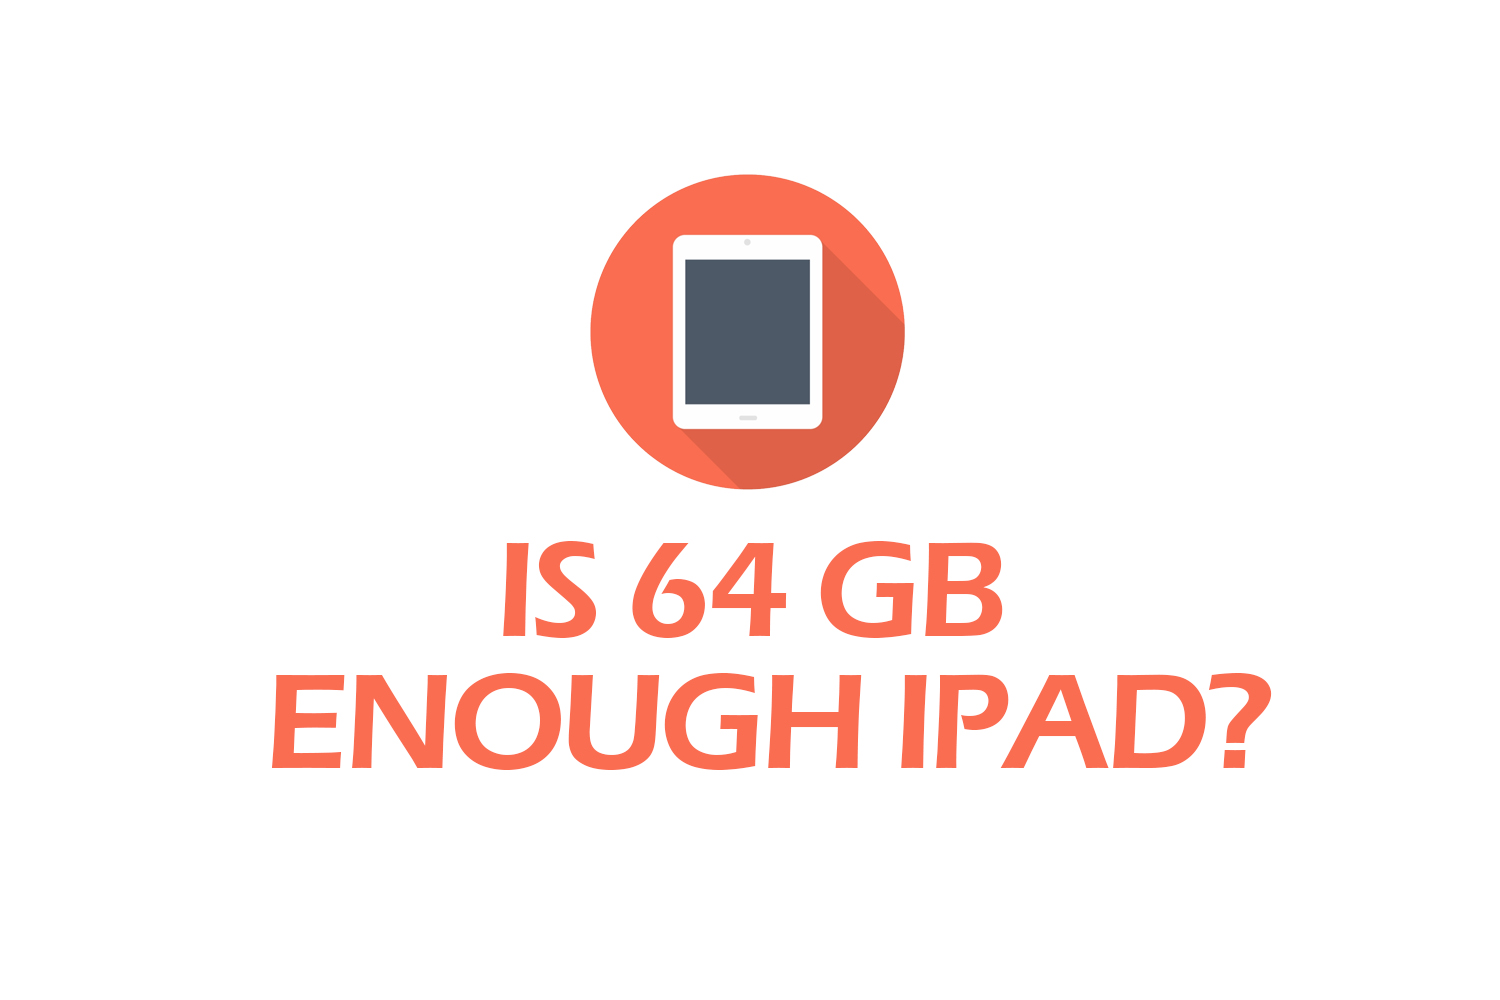 Is 64 GB enough iPad